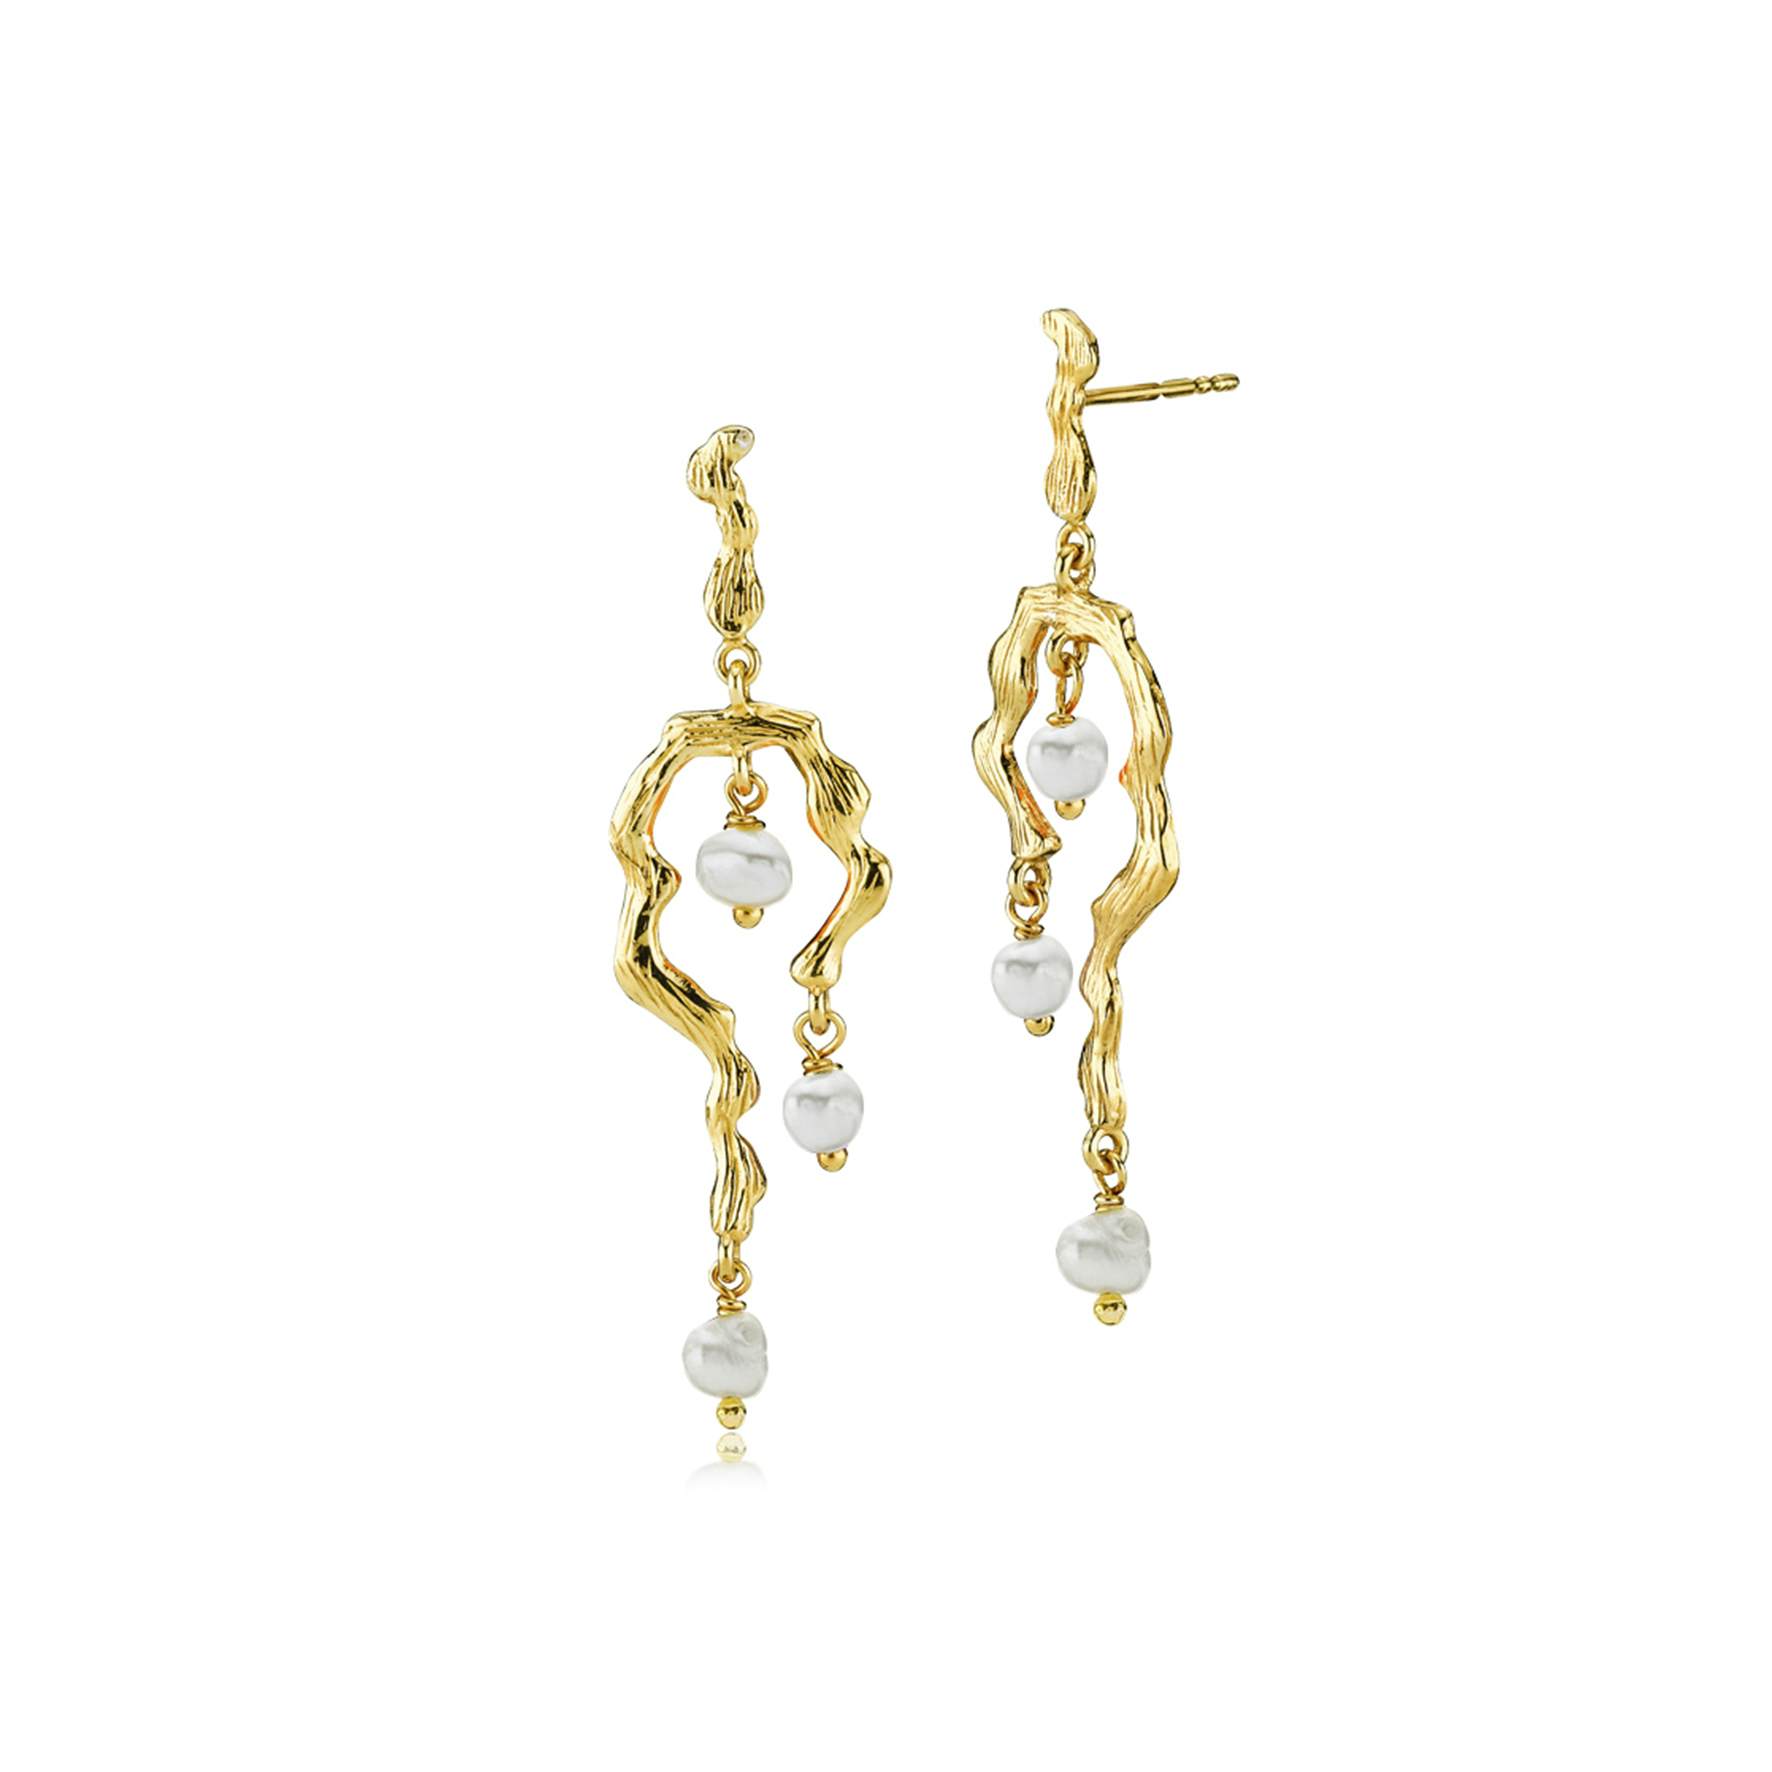 Lærke Bentsen By Sistie Long Earrings With Pearls fra Sistie i Forgylt-Sølv Sterling 925